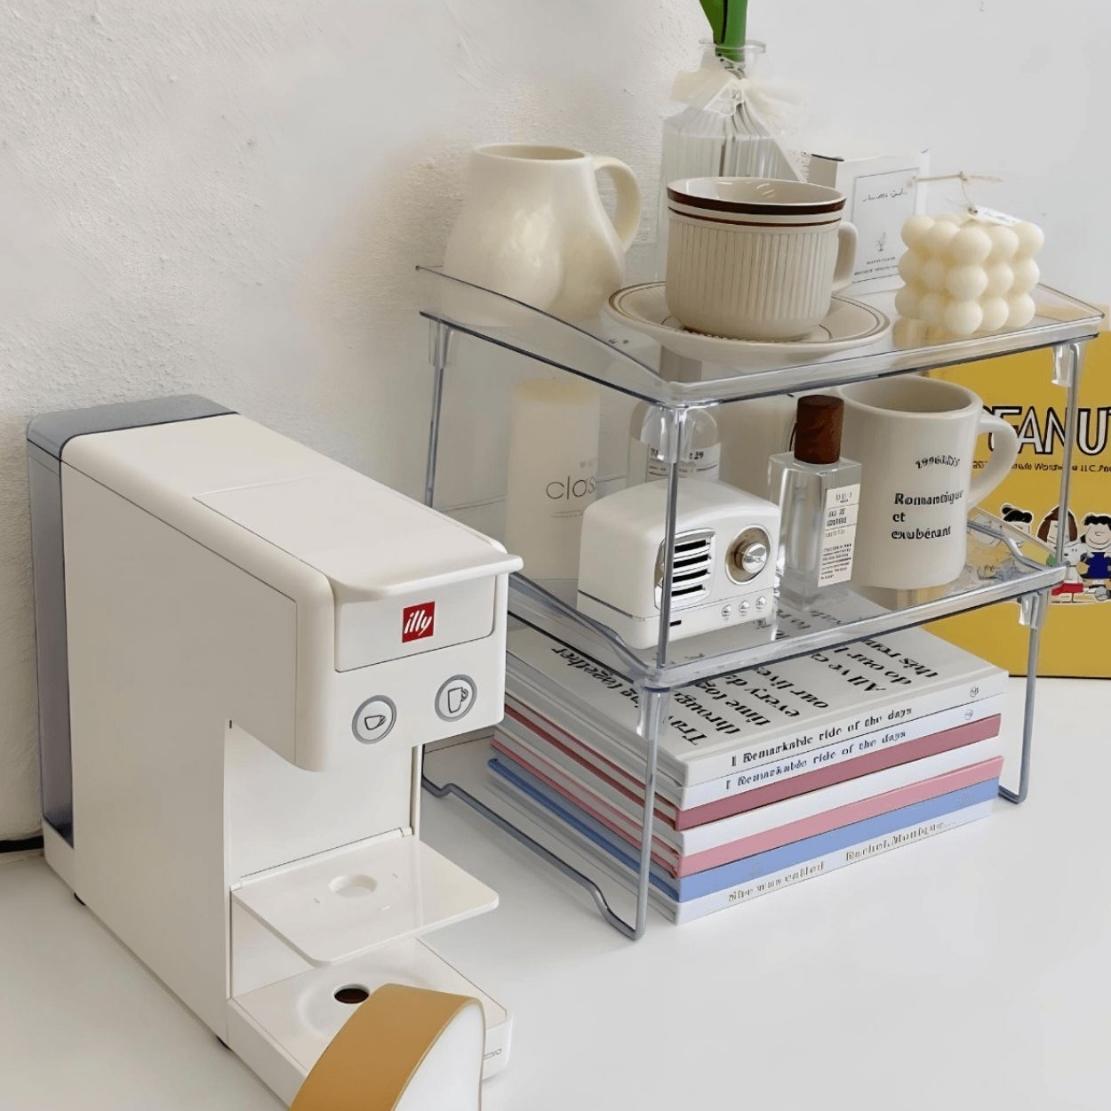 Foldable acrylic kitchen storage tray with mugs, candle, books & coffee machine